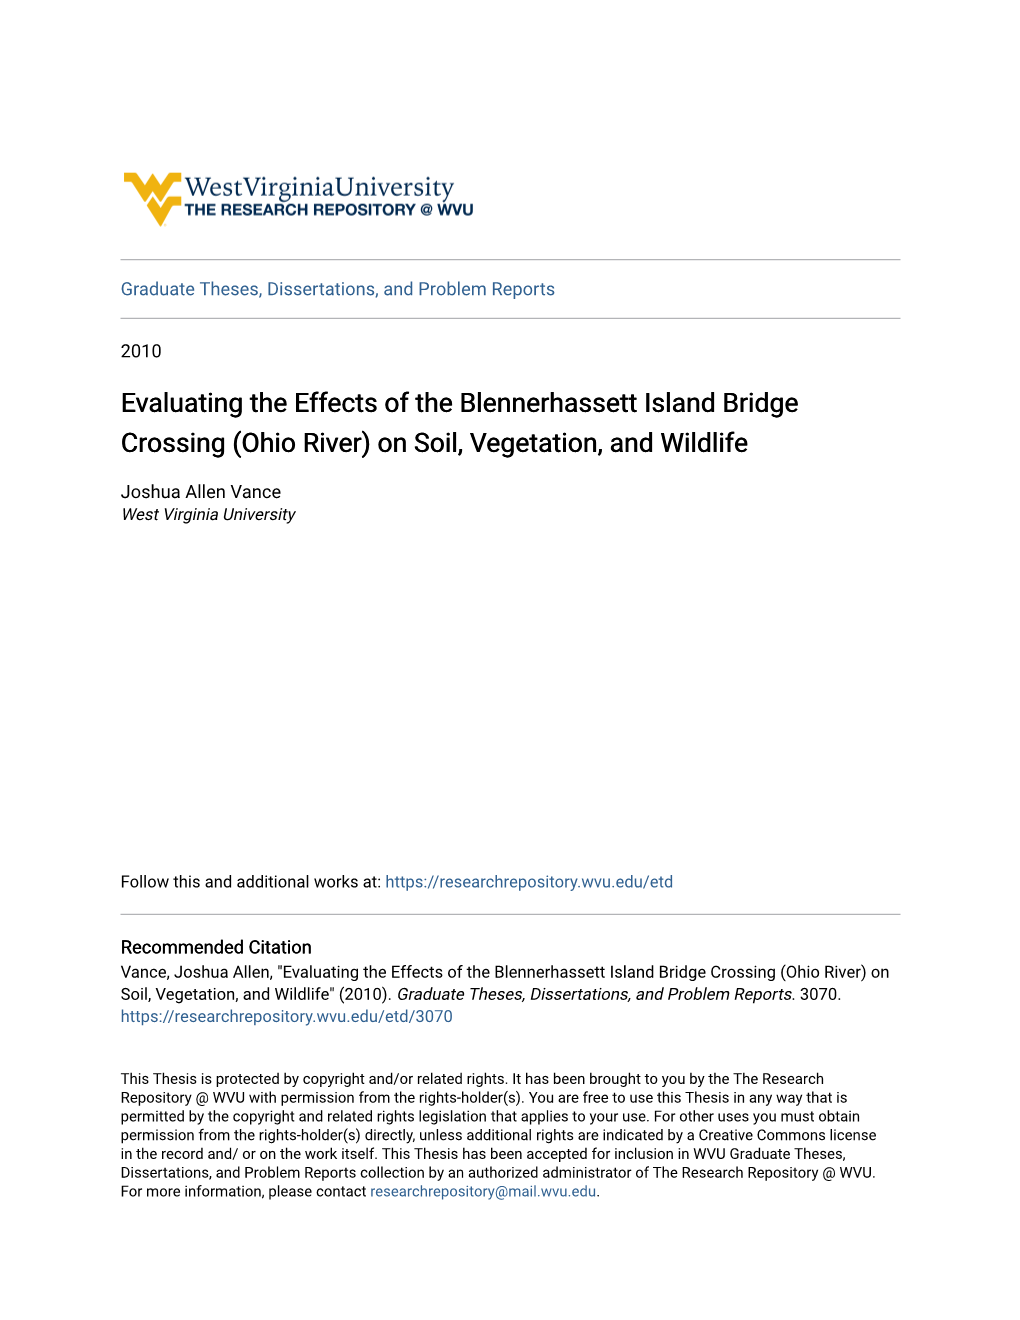 Evaluating the Effects of the Blennerhassett Island Bridge Crossing (Ohio River) on Soil, Vegetation, and Wildlife